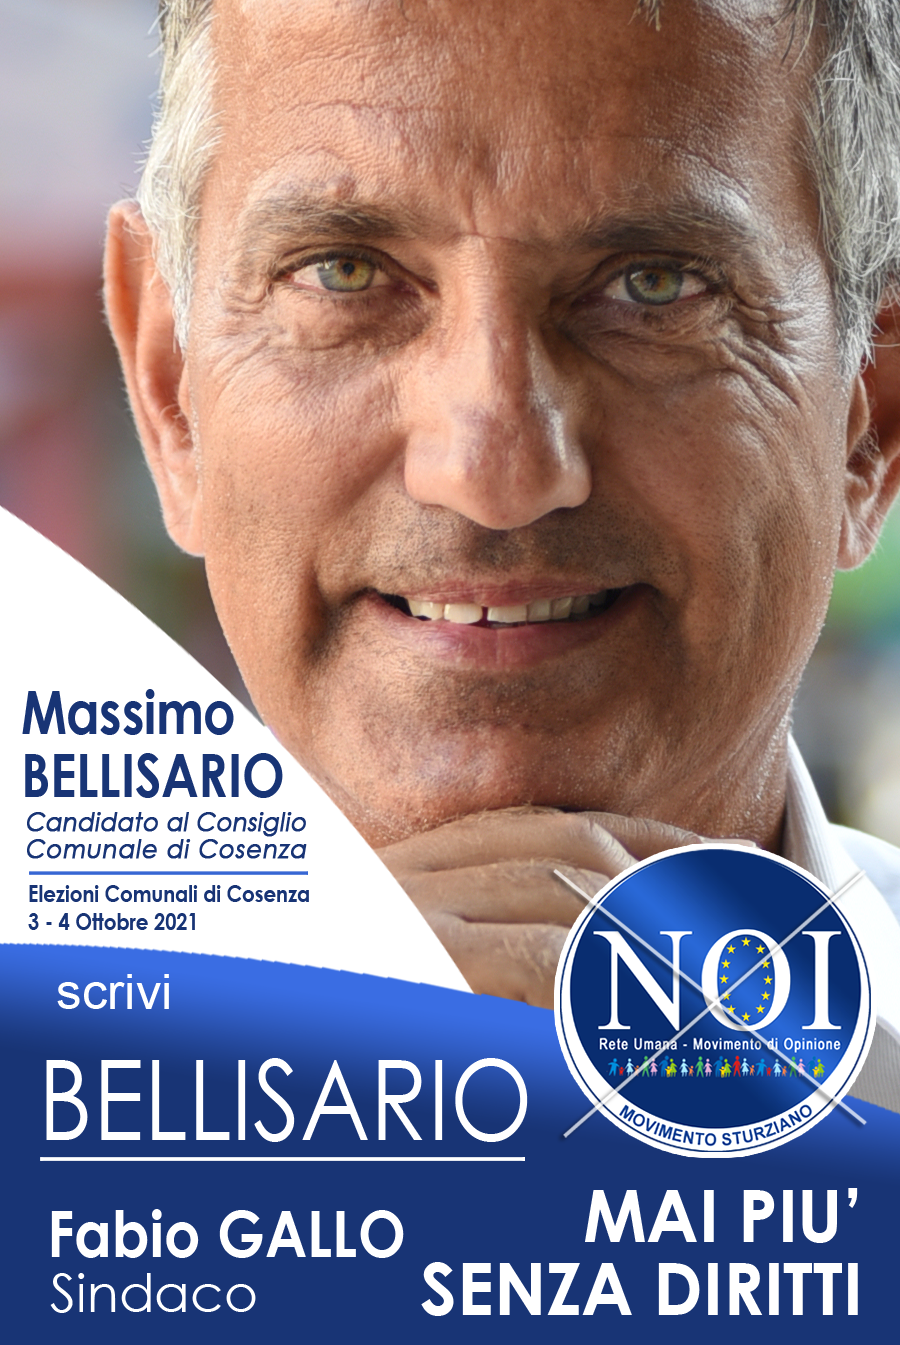 Massimo Bellisario